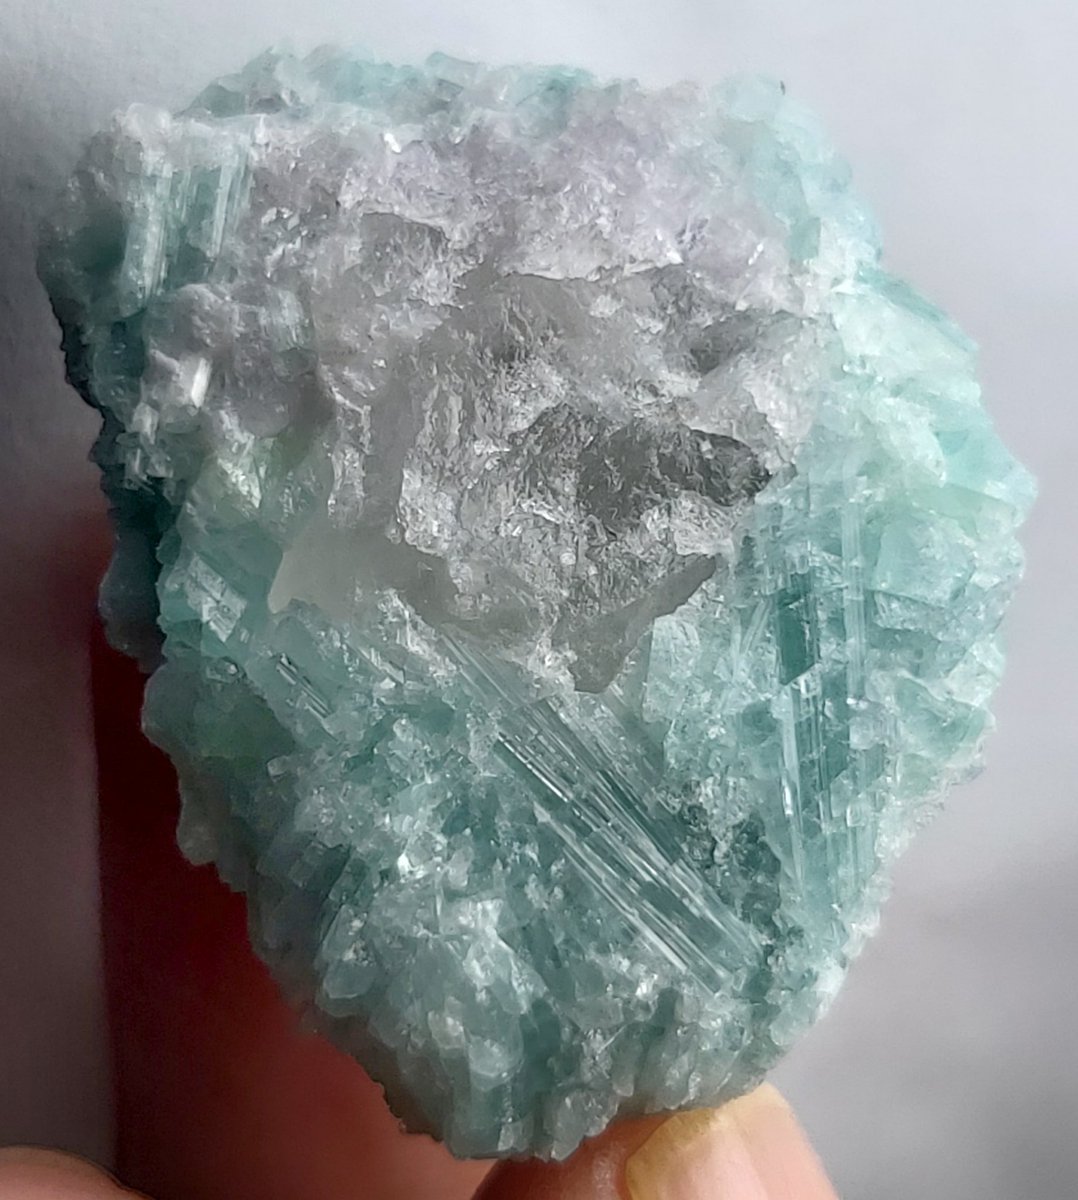 ebay.com/str/karan5535
Click here👆
#minerals #Minerals Paradise #AbabeelMinerals #ababeelgems #ab #stones #gemsandminerals #mineralspecimen #himalayanquartz #quartz #quartzcluster #crystals #specimen #cluster #luster #ebay